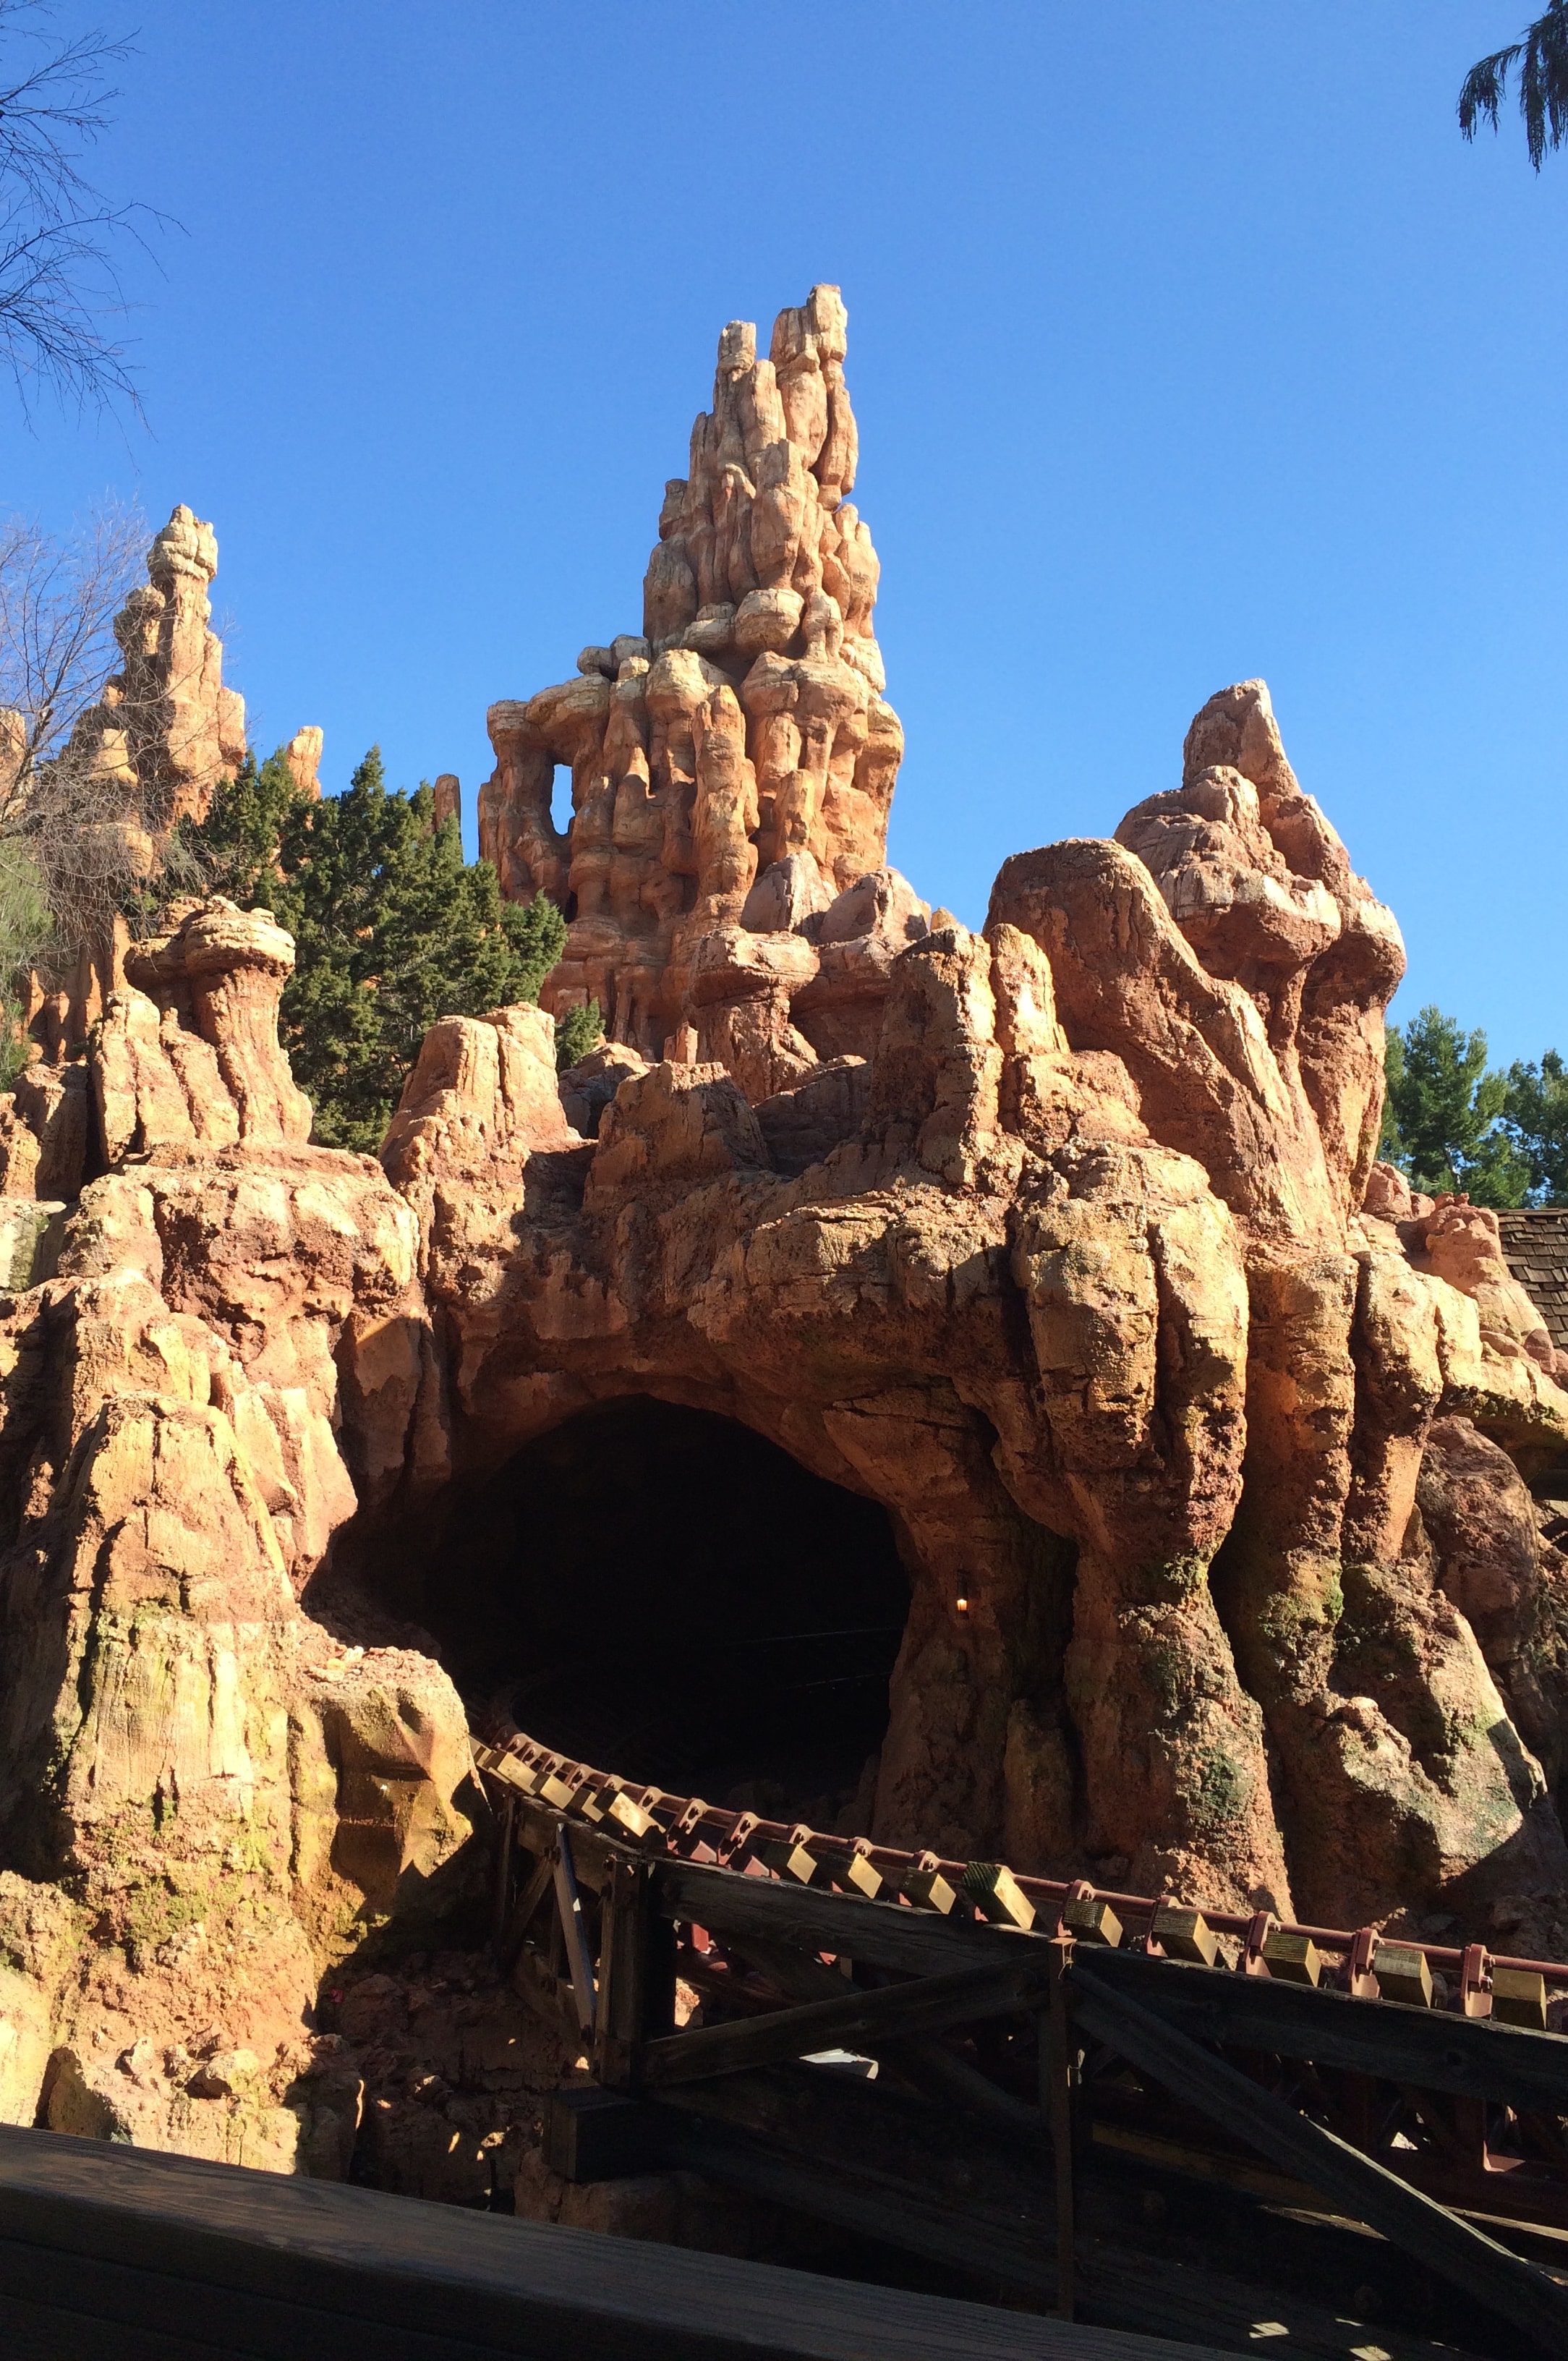 Fastest Roller Coasters in Disneyland & California Adventure